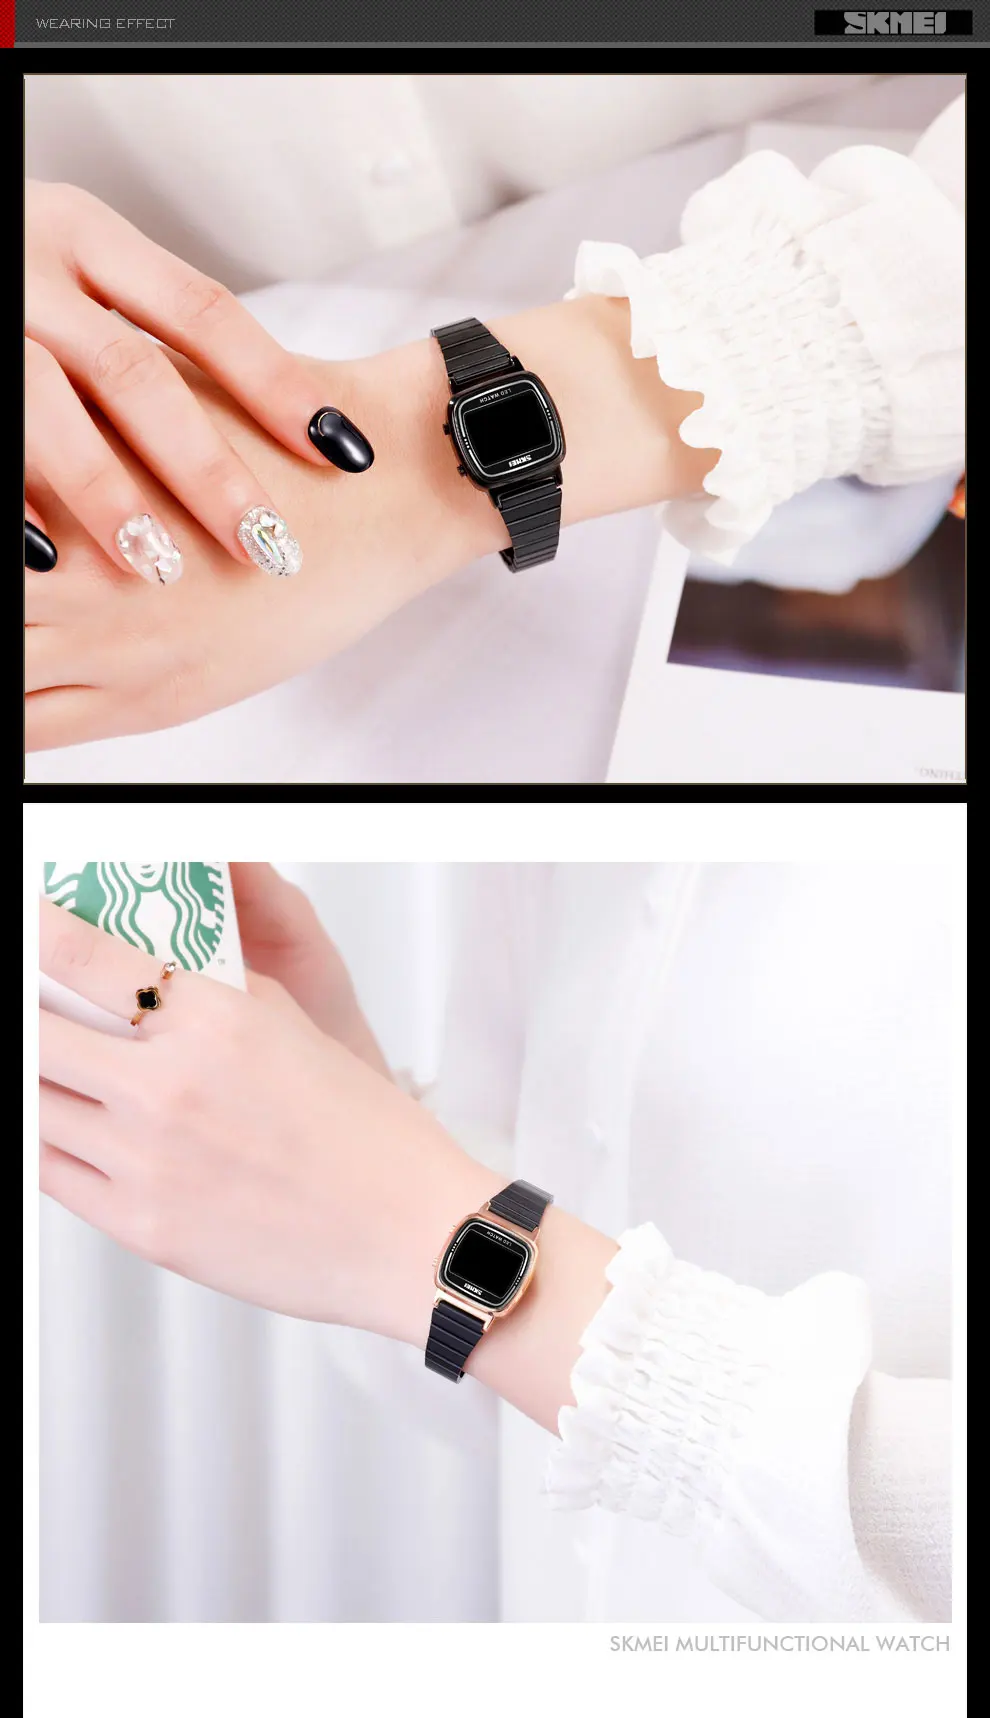 SKMEI Ultra Thin Luxury Women's Silver Stainless Steel Watches Women Fashion LED Digital Dress Business Wrist watch Reloj Mujer